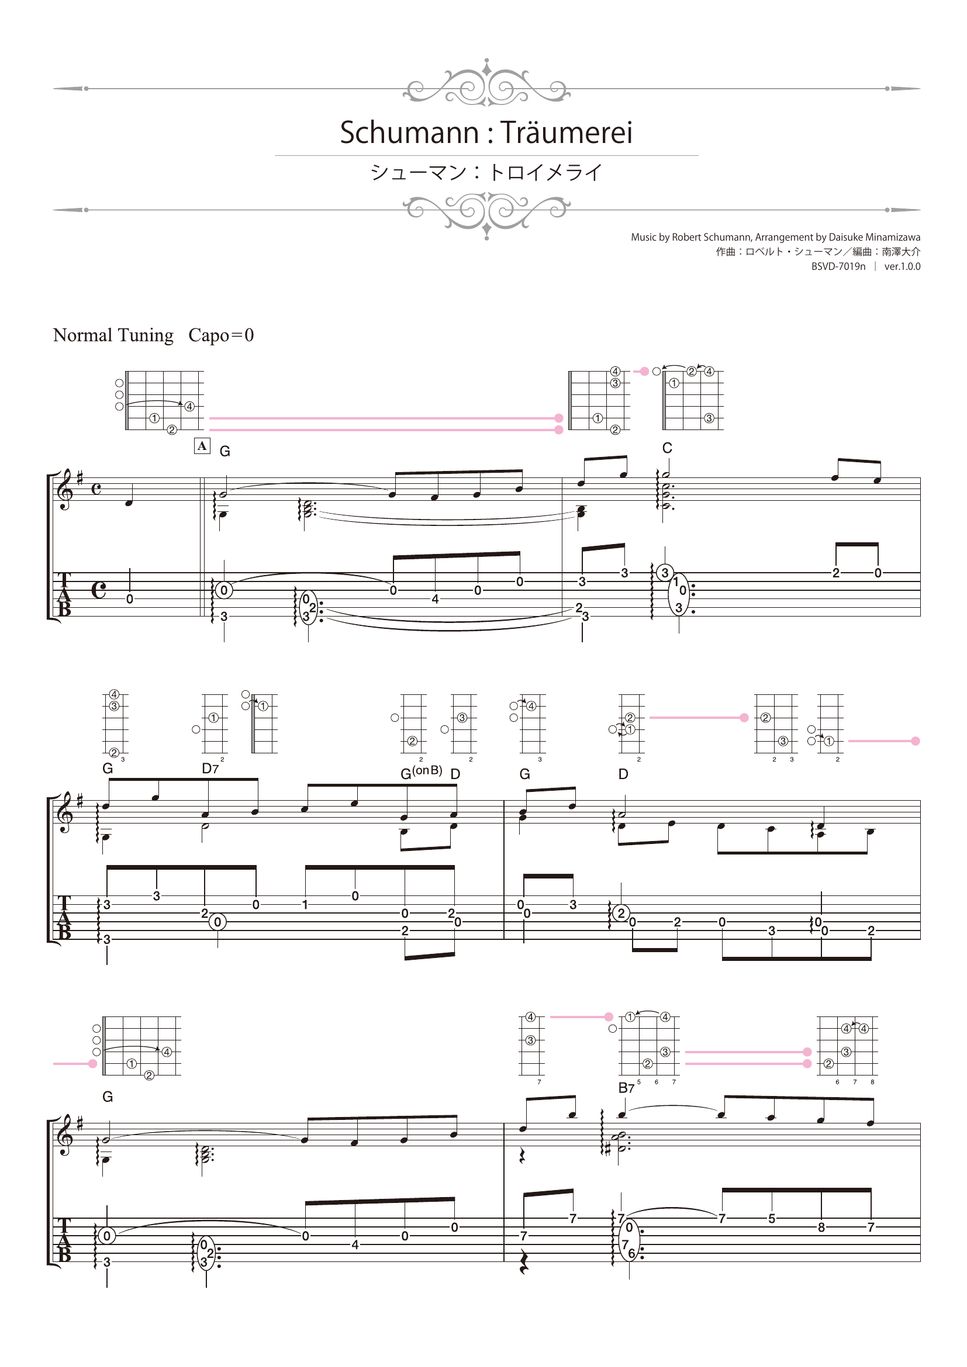 Schumann - Träumerei (Solo Guitar) by Daisuke Minamizawa